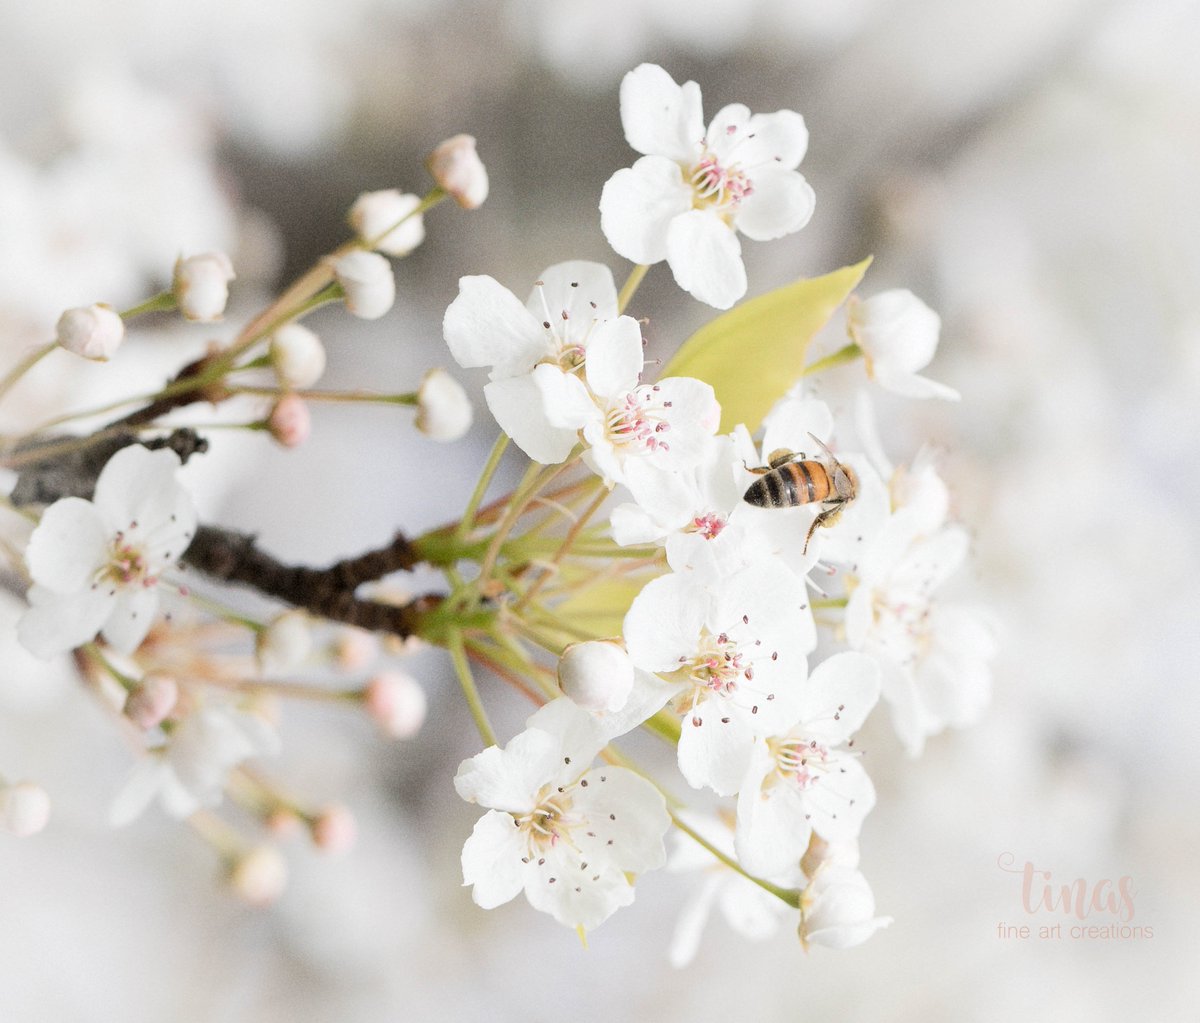 Signs of Spring.. #bees  #pollinators #pollinatorsareimportant #Flowers #tree #naturelovers #art #fineartphotography #artistsontwitter